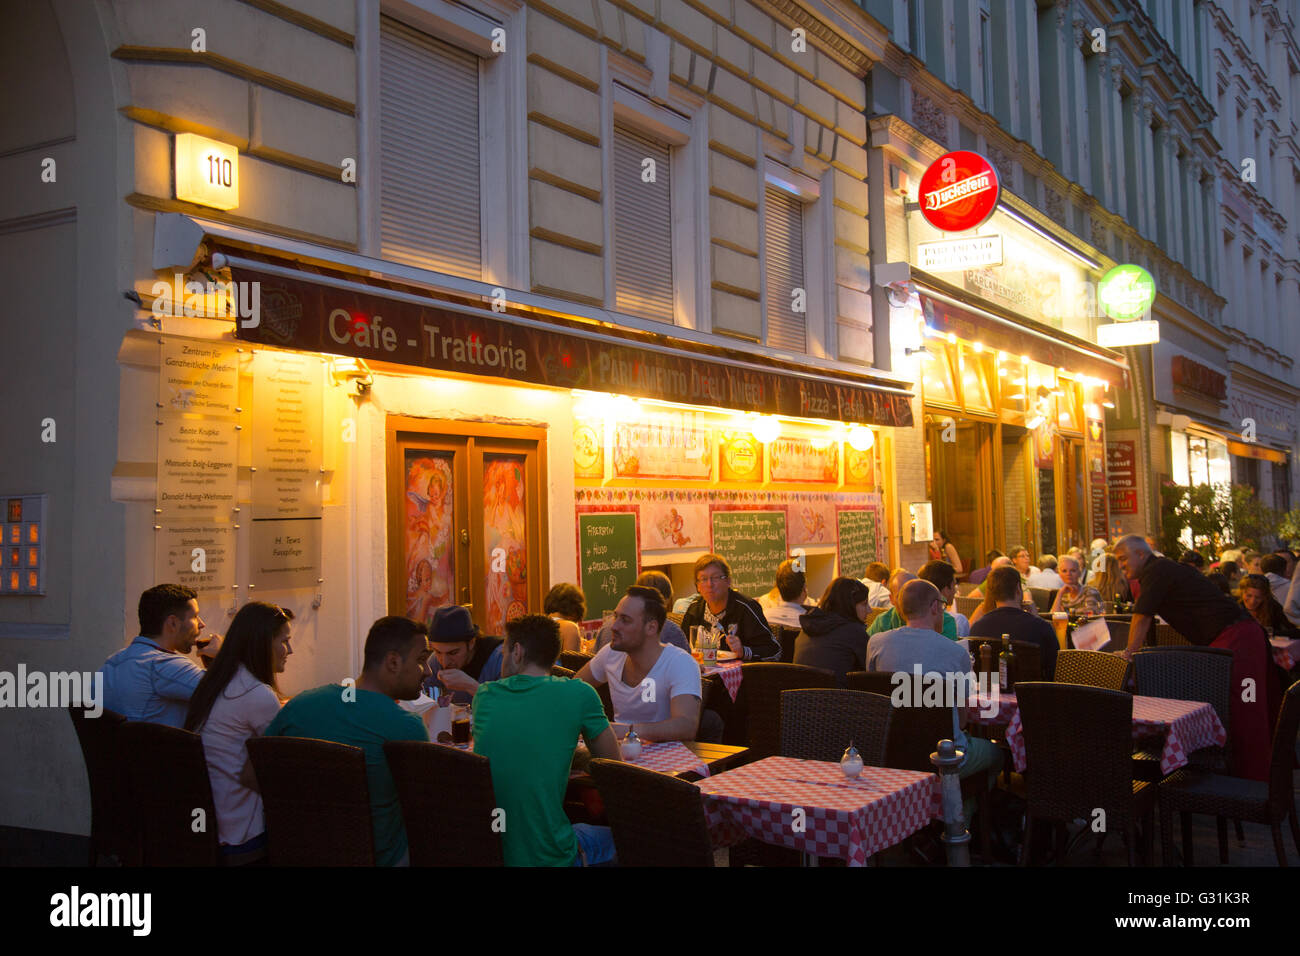 Berlin, Germany, restaurants Bergmannstrasse Stock Photo